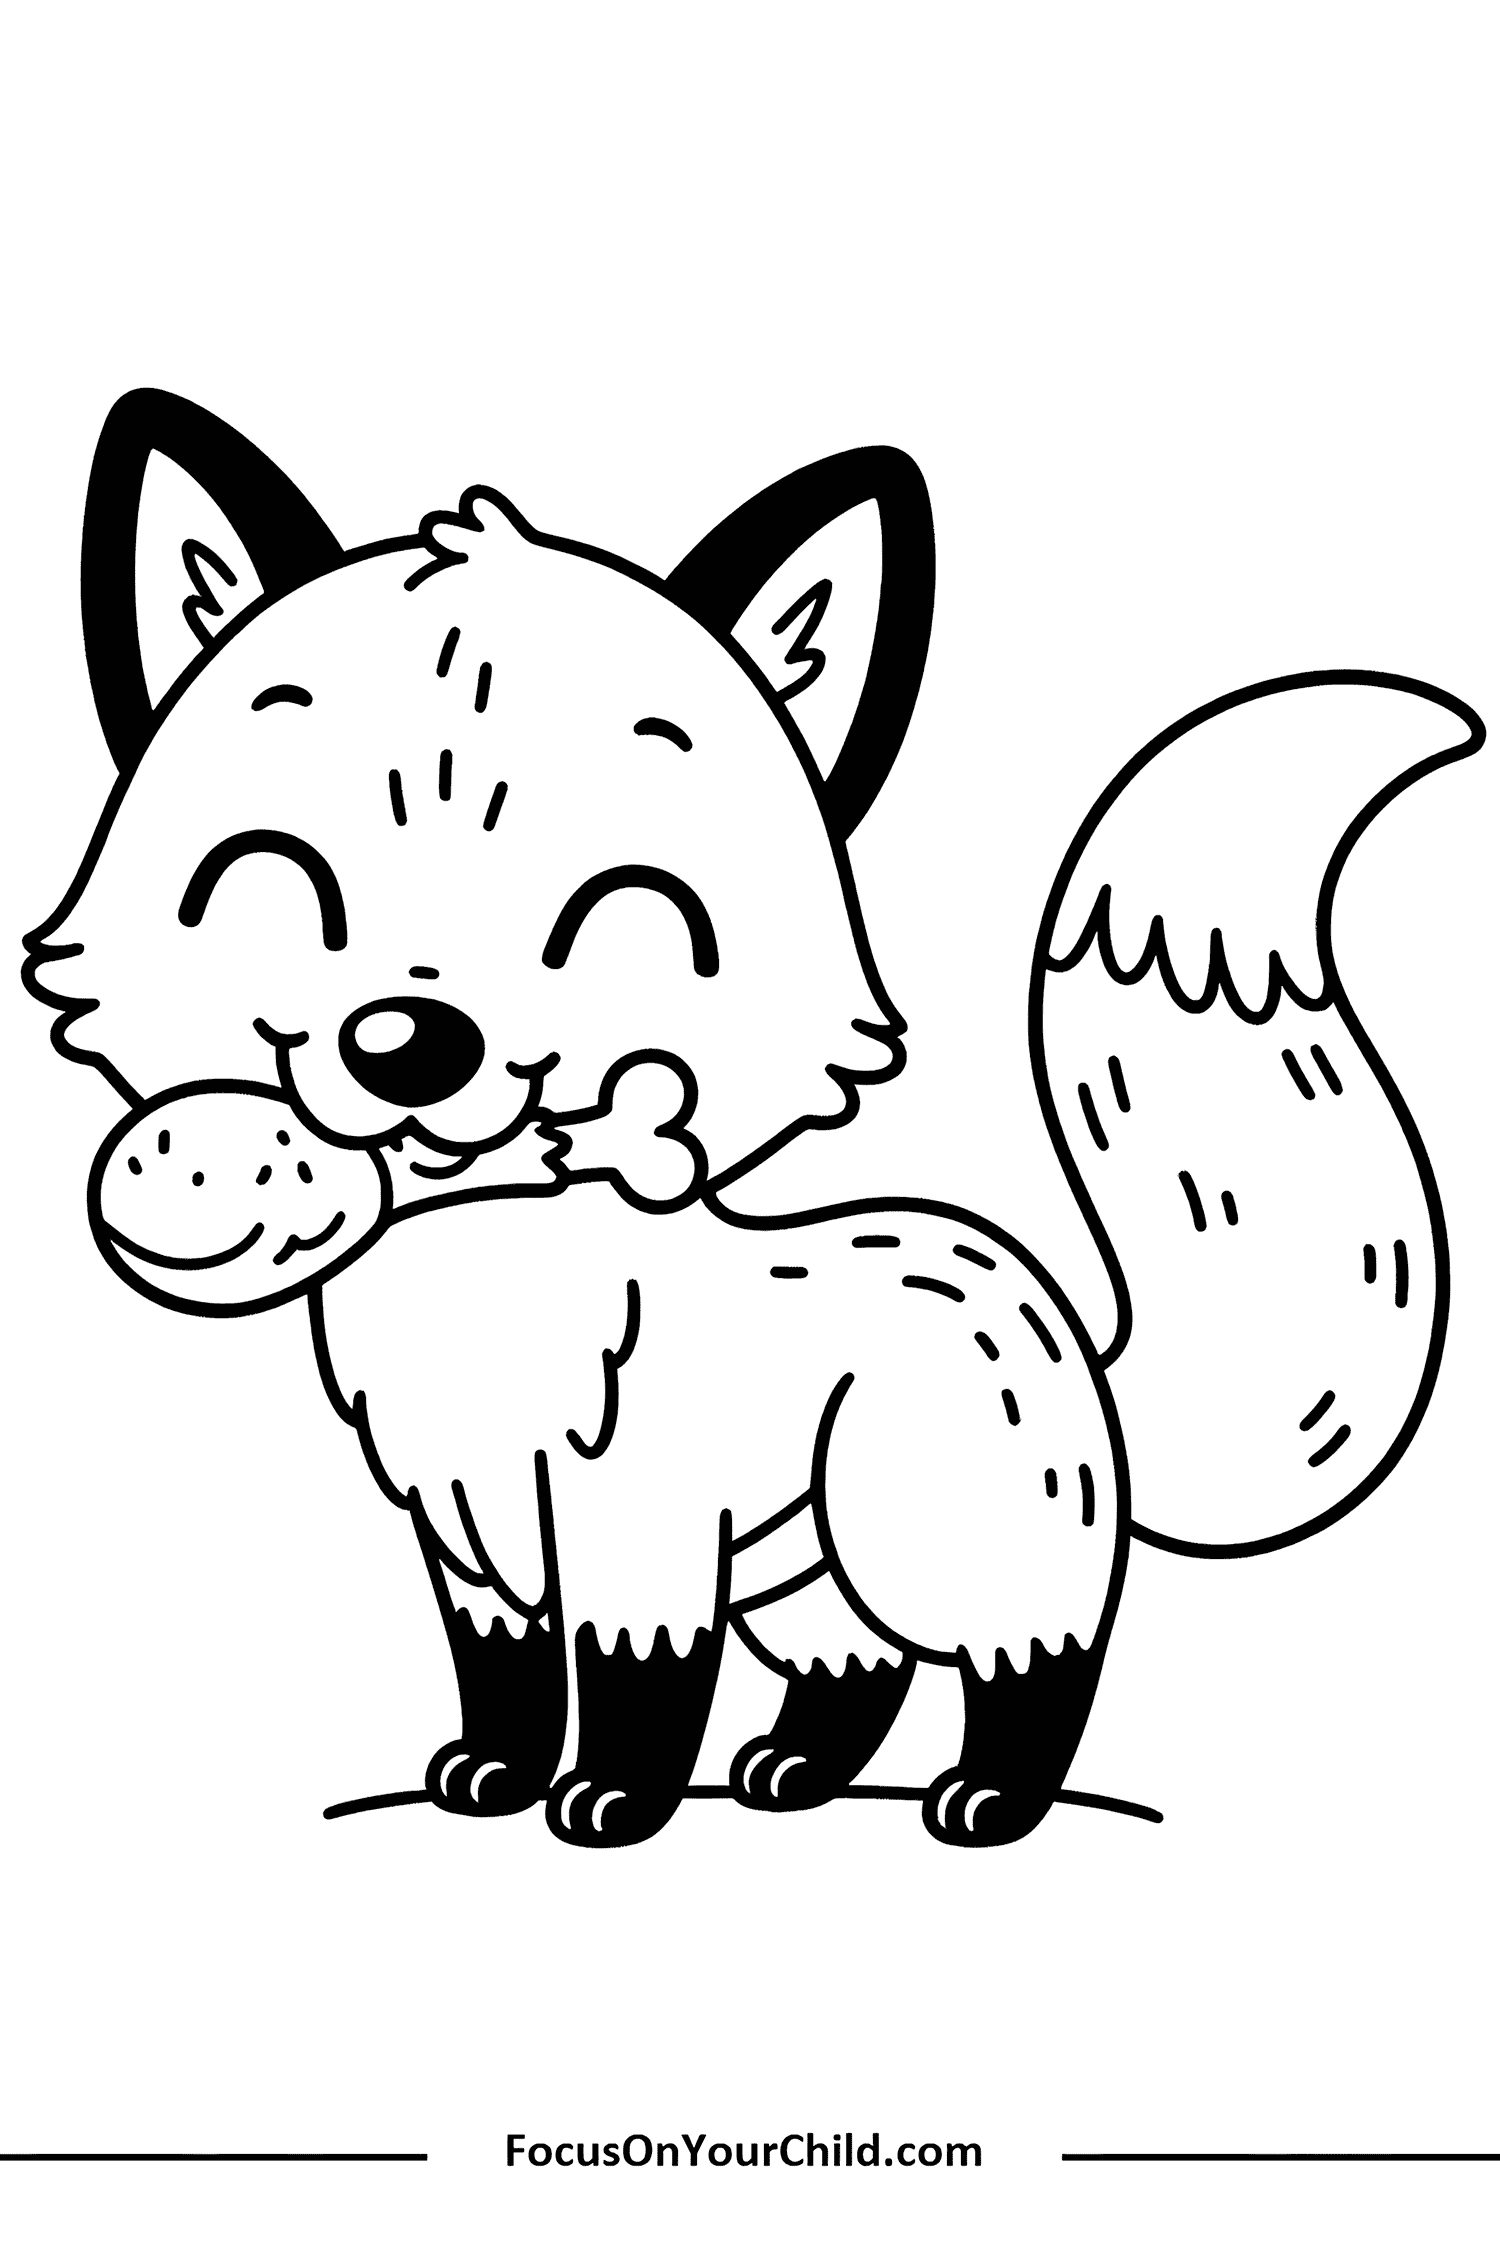 Charming cartoon fox illustration for coloring from FocusOnYourChild.com.